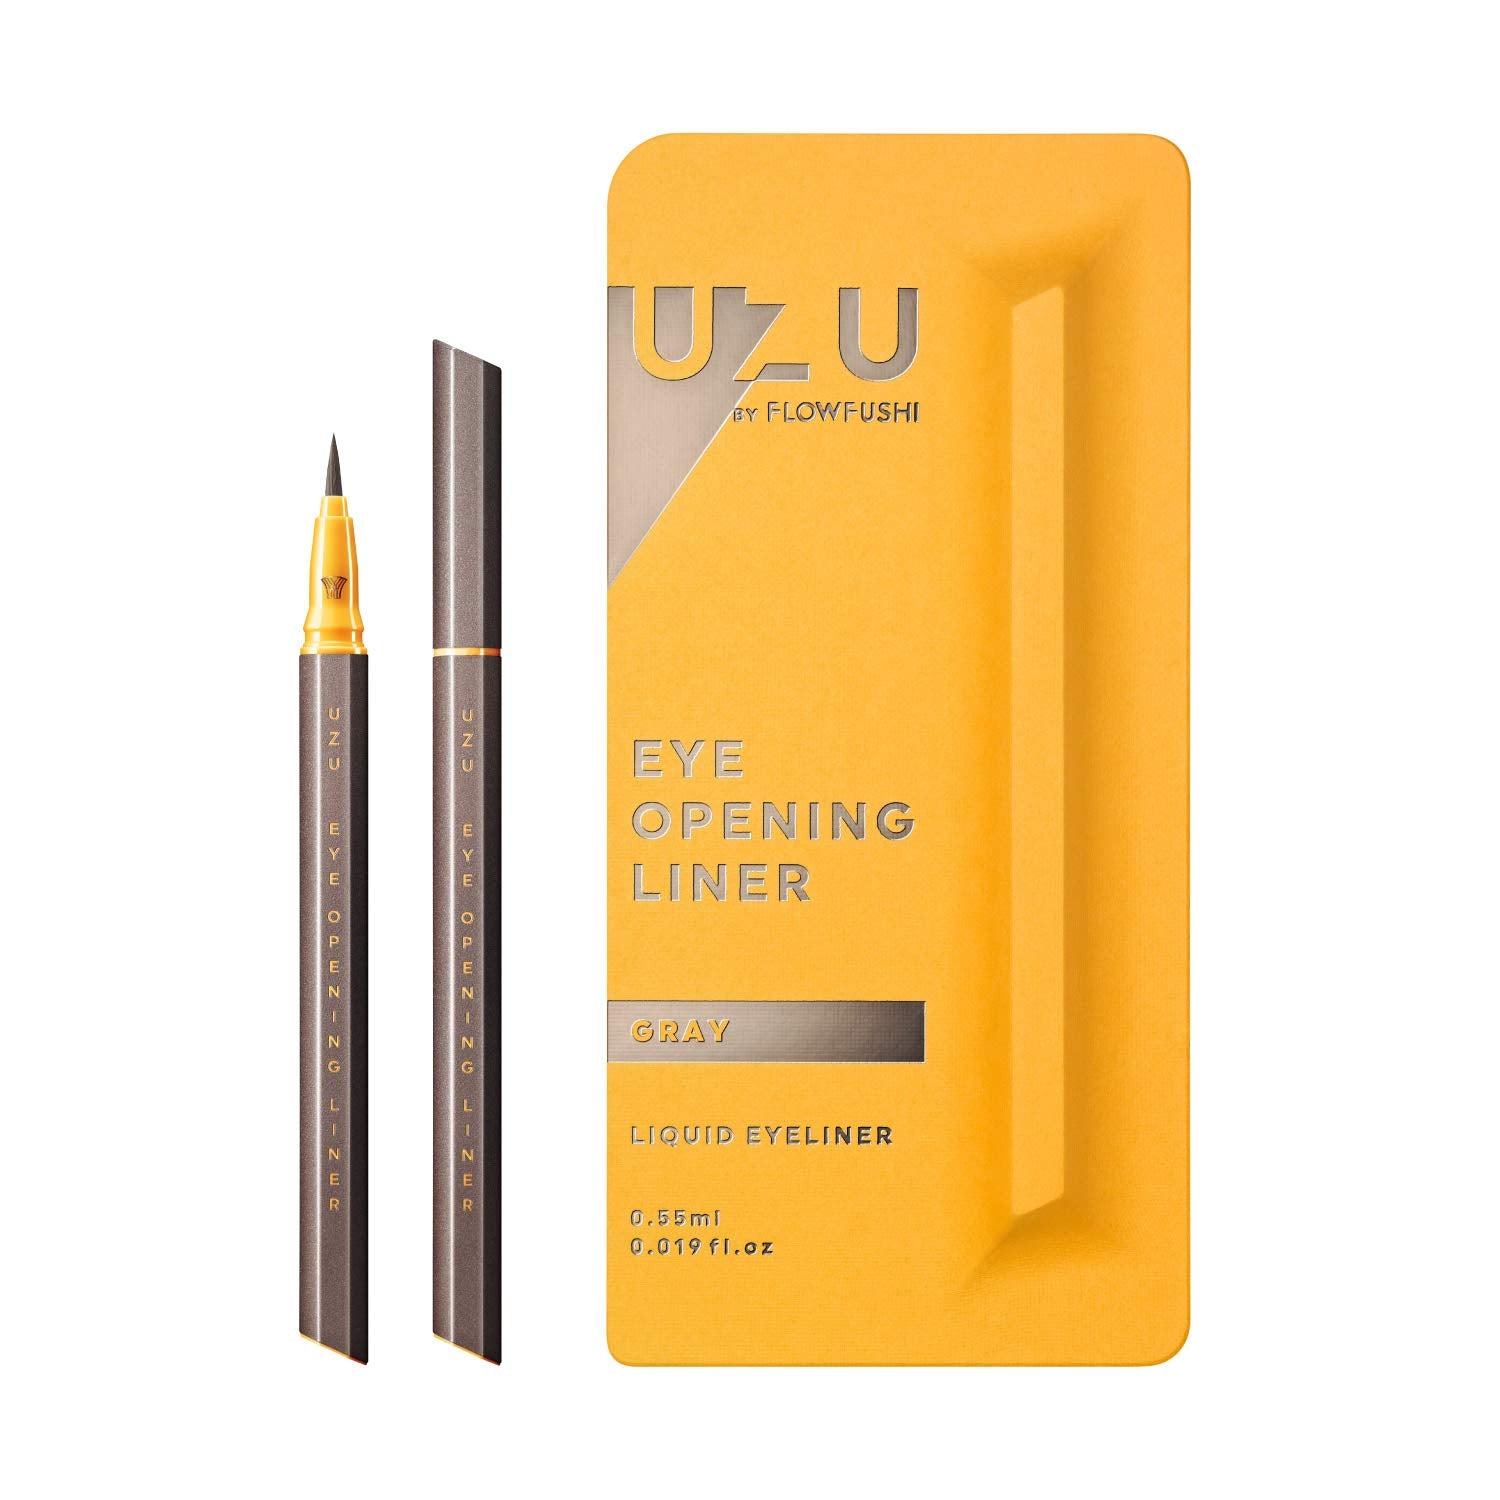 owfushi UZU Eye Opening Liner Liquid Eyeliner (Gray)